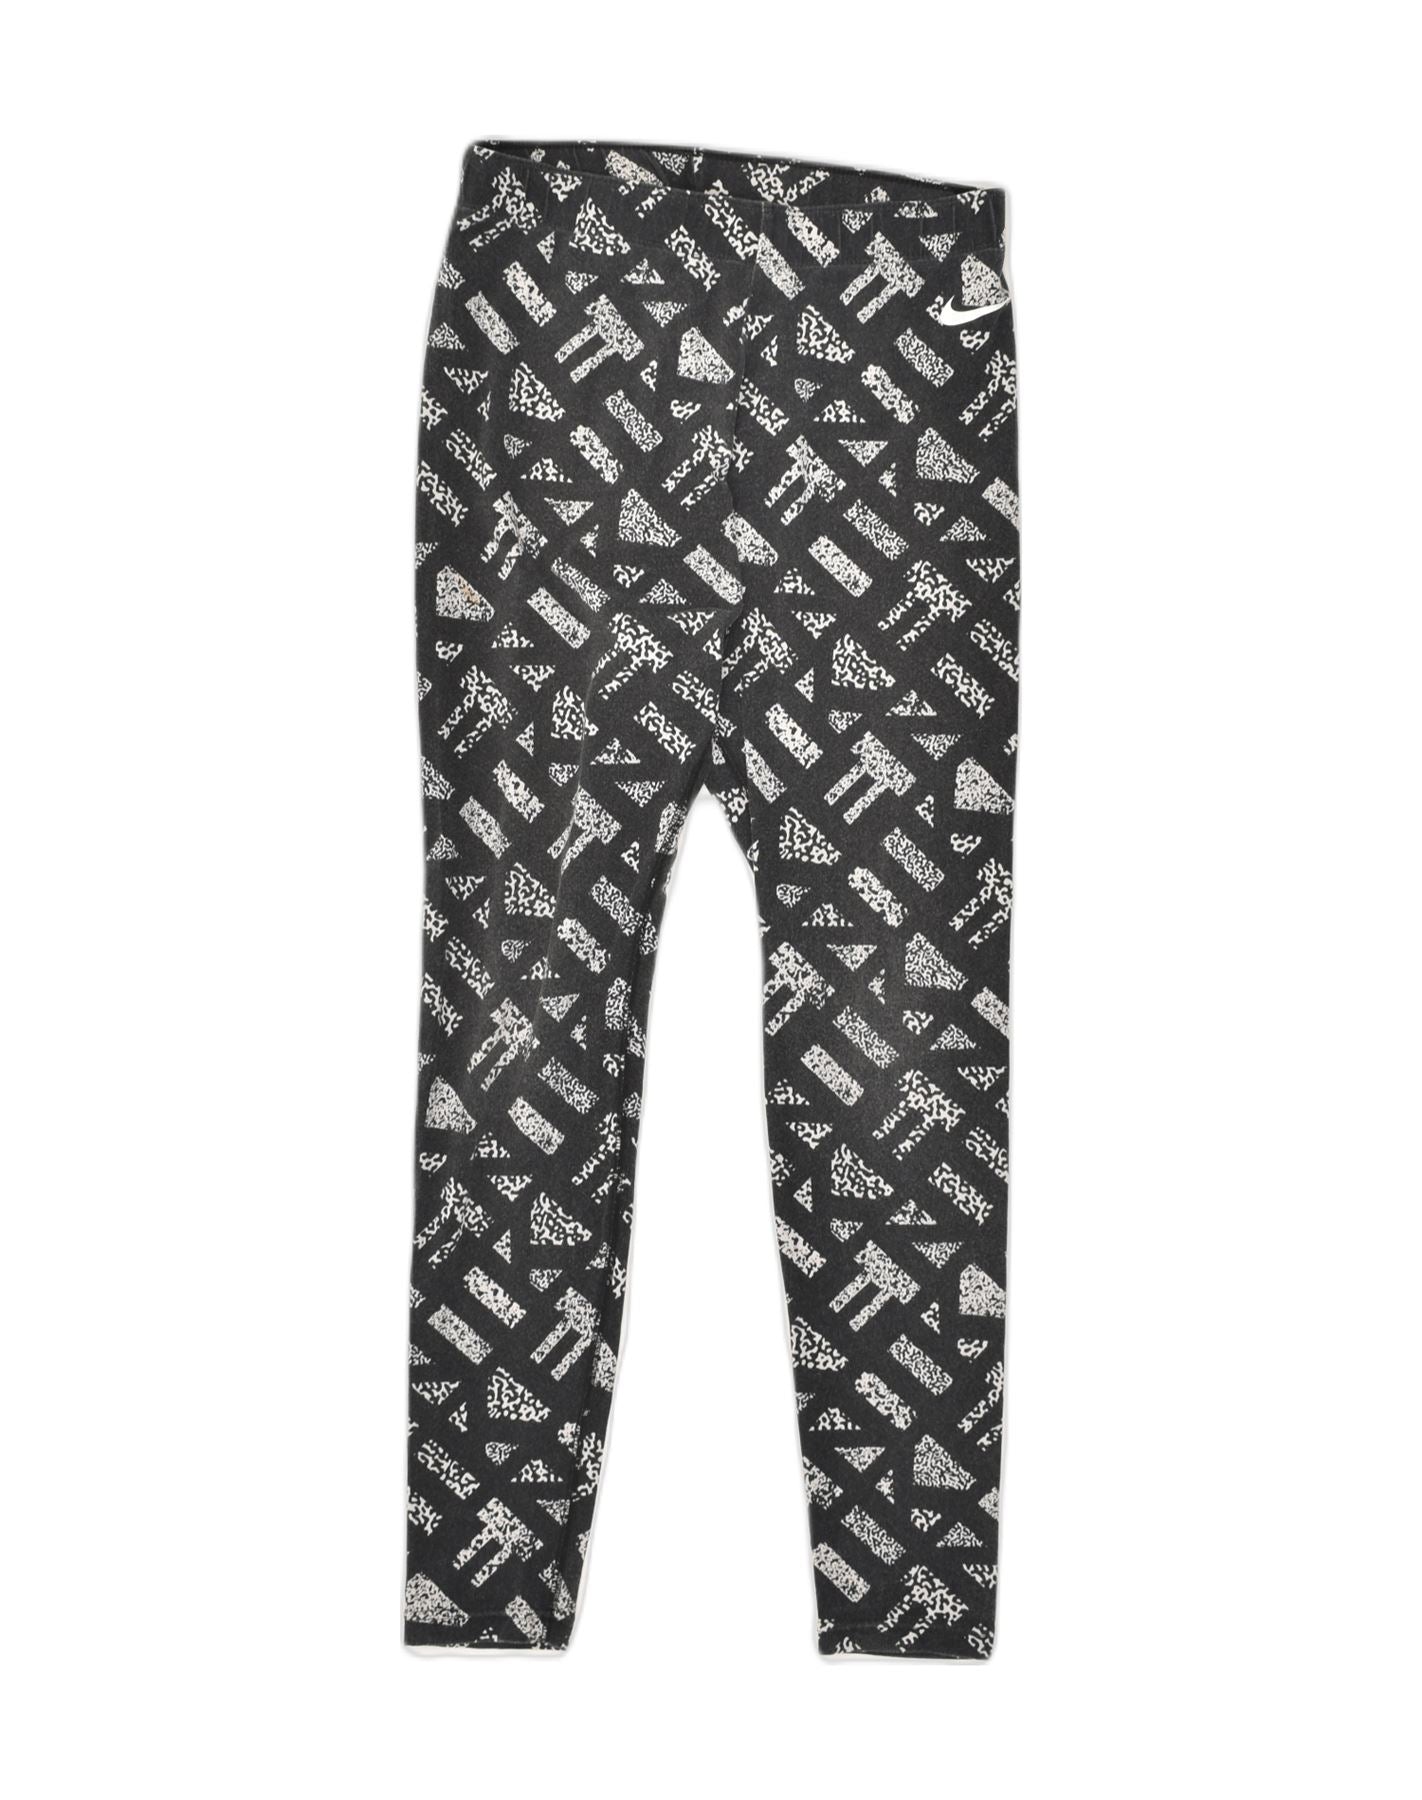 NIKE Womens Crazy Pattern Leggings UK 8 Small Black Geometric Cotton, Vintage & Second-Hand Clothing Online